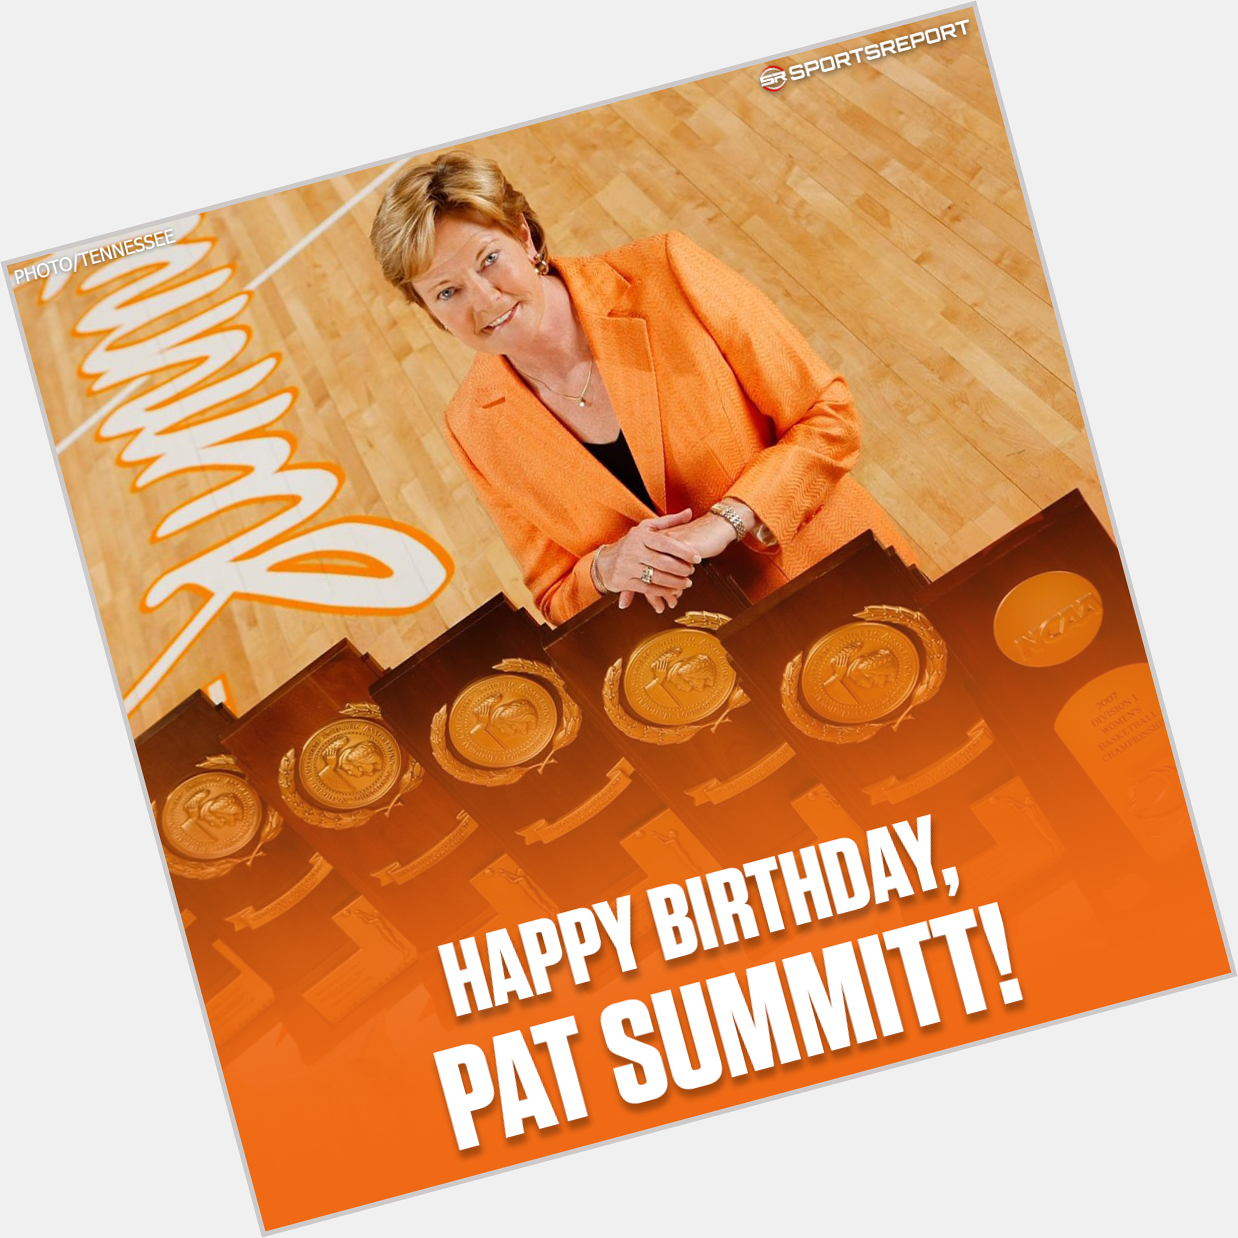 Happy Birthday (forever) to Coaching Legend, Pat Summitt! 